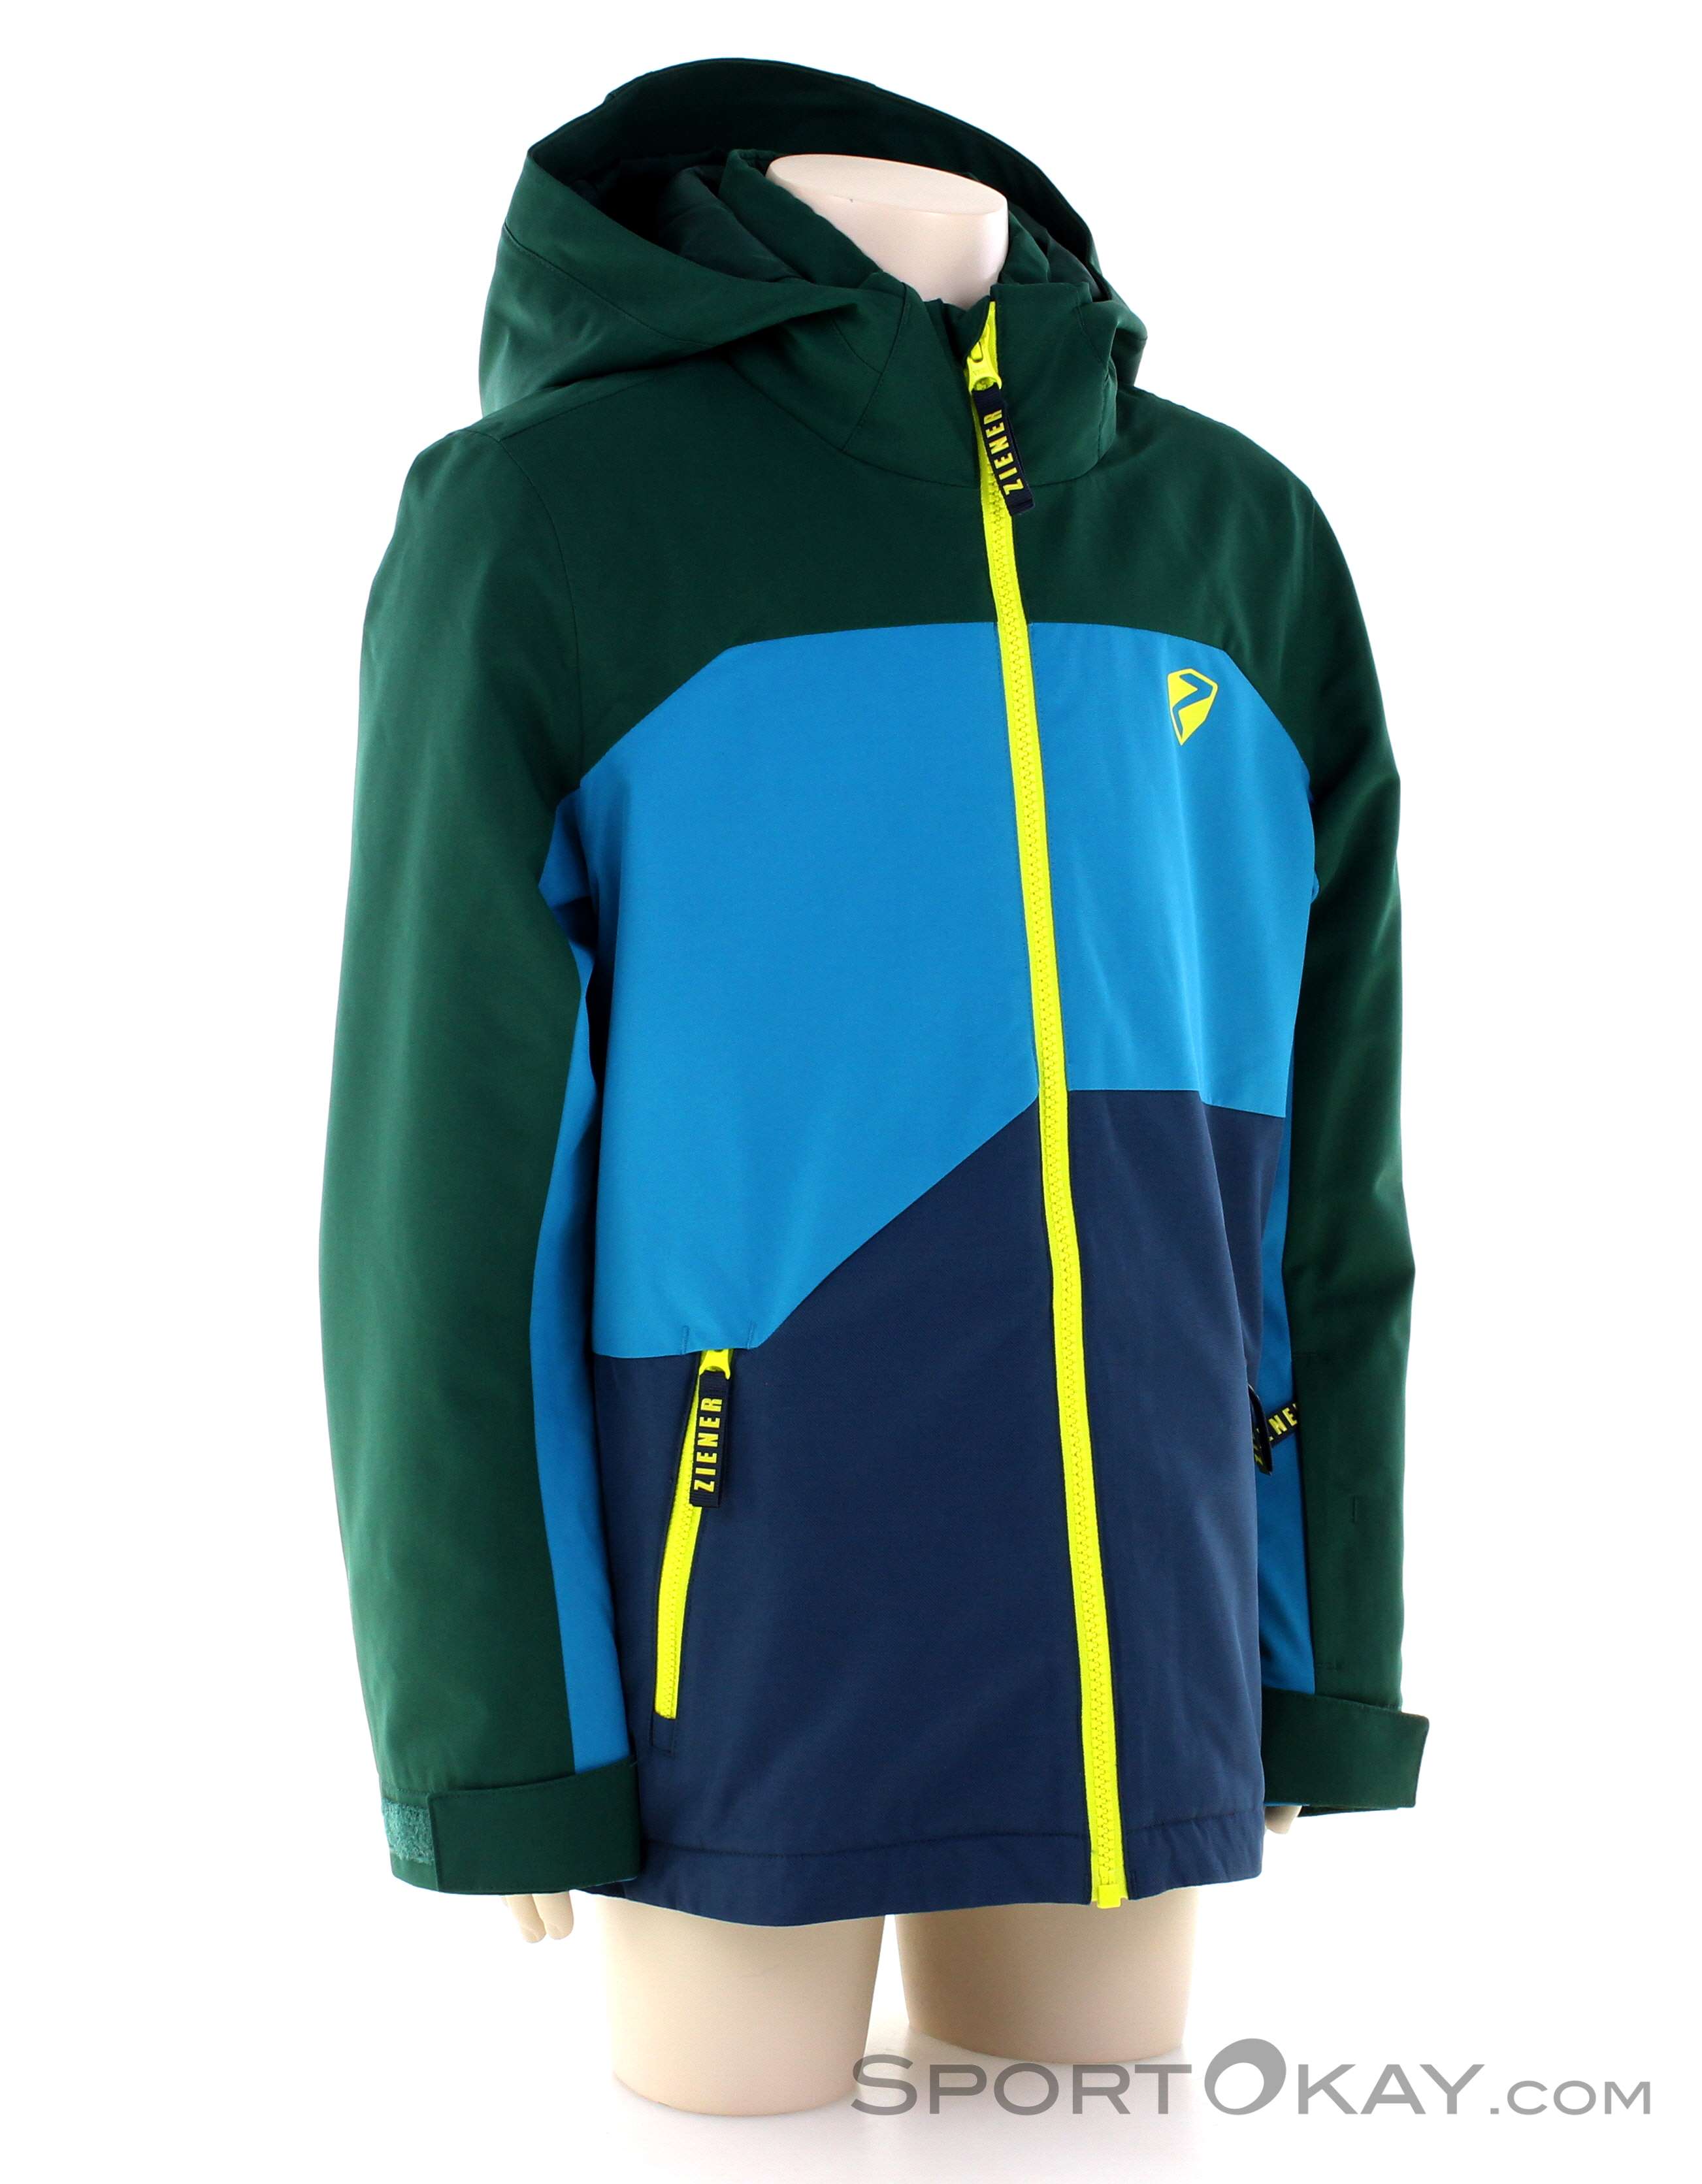 Ziener Ski Jacket - - Anderl All Freeride Jun - Kids Ski Ski Clothing Ski & - Jackets